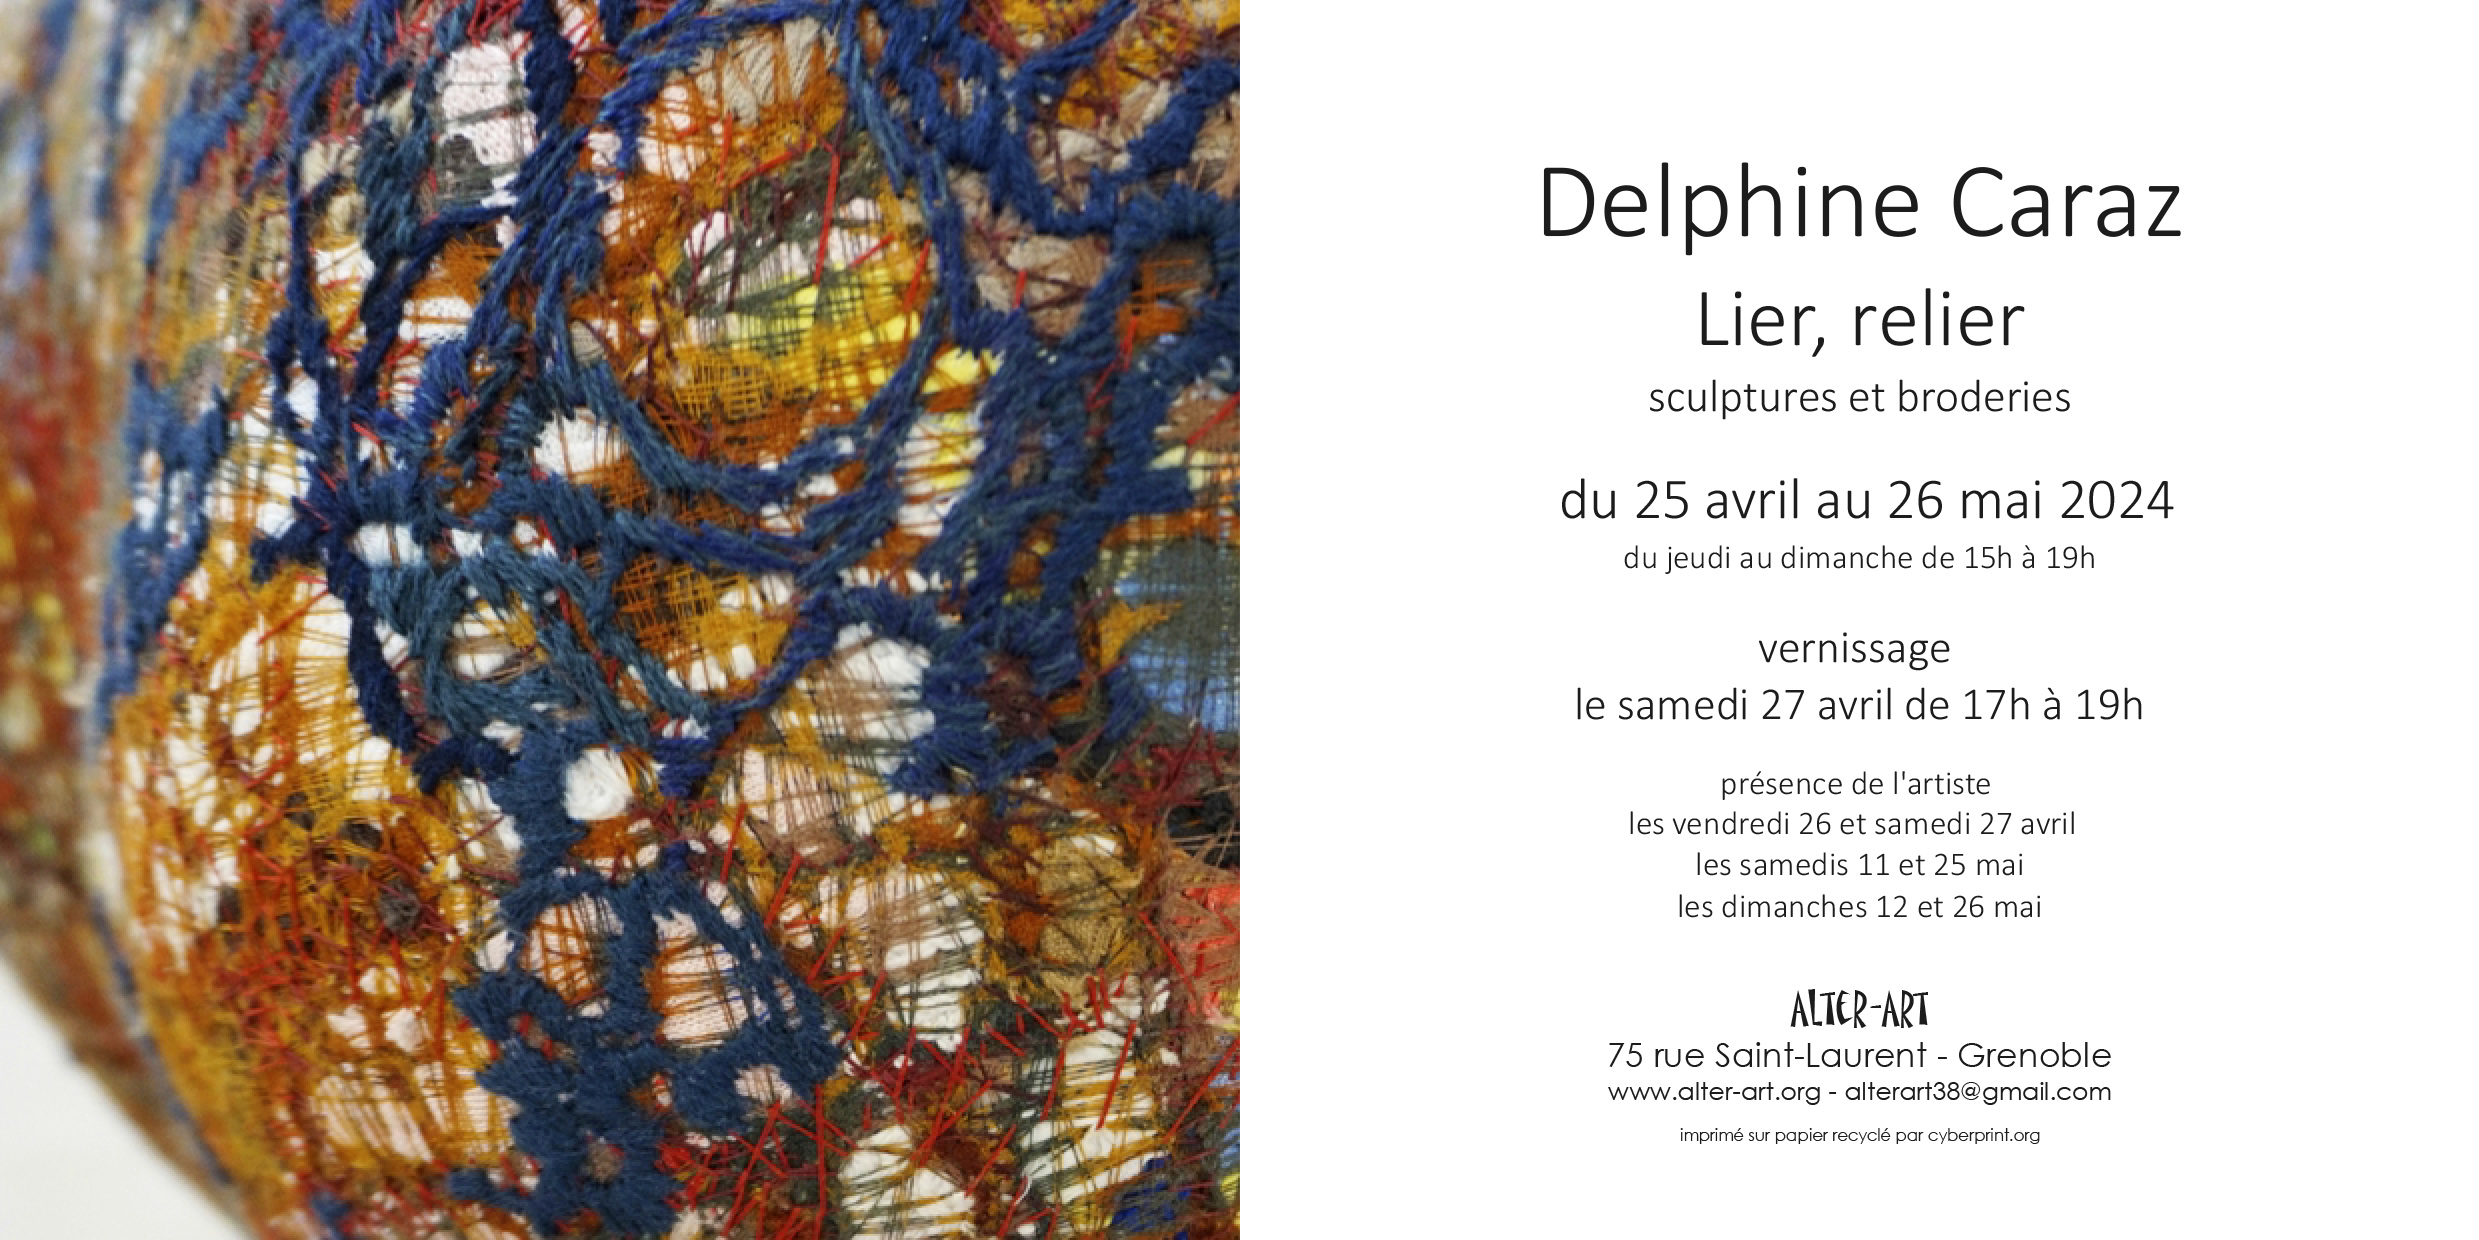 Sculptures et broderies de Delphine Caraz